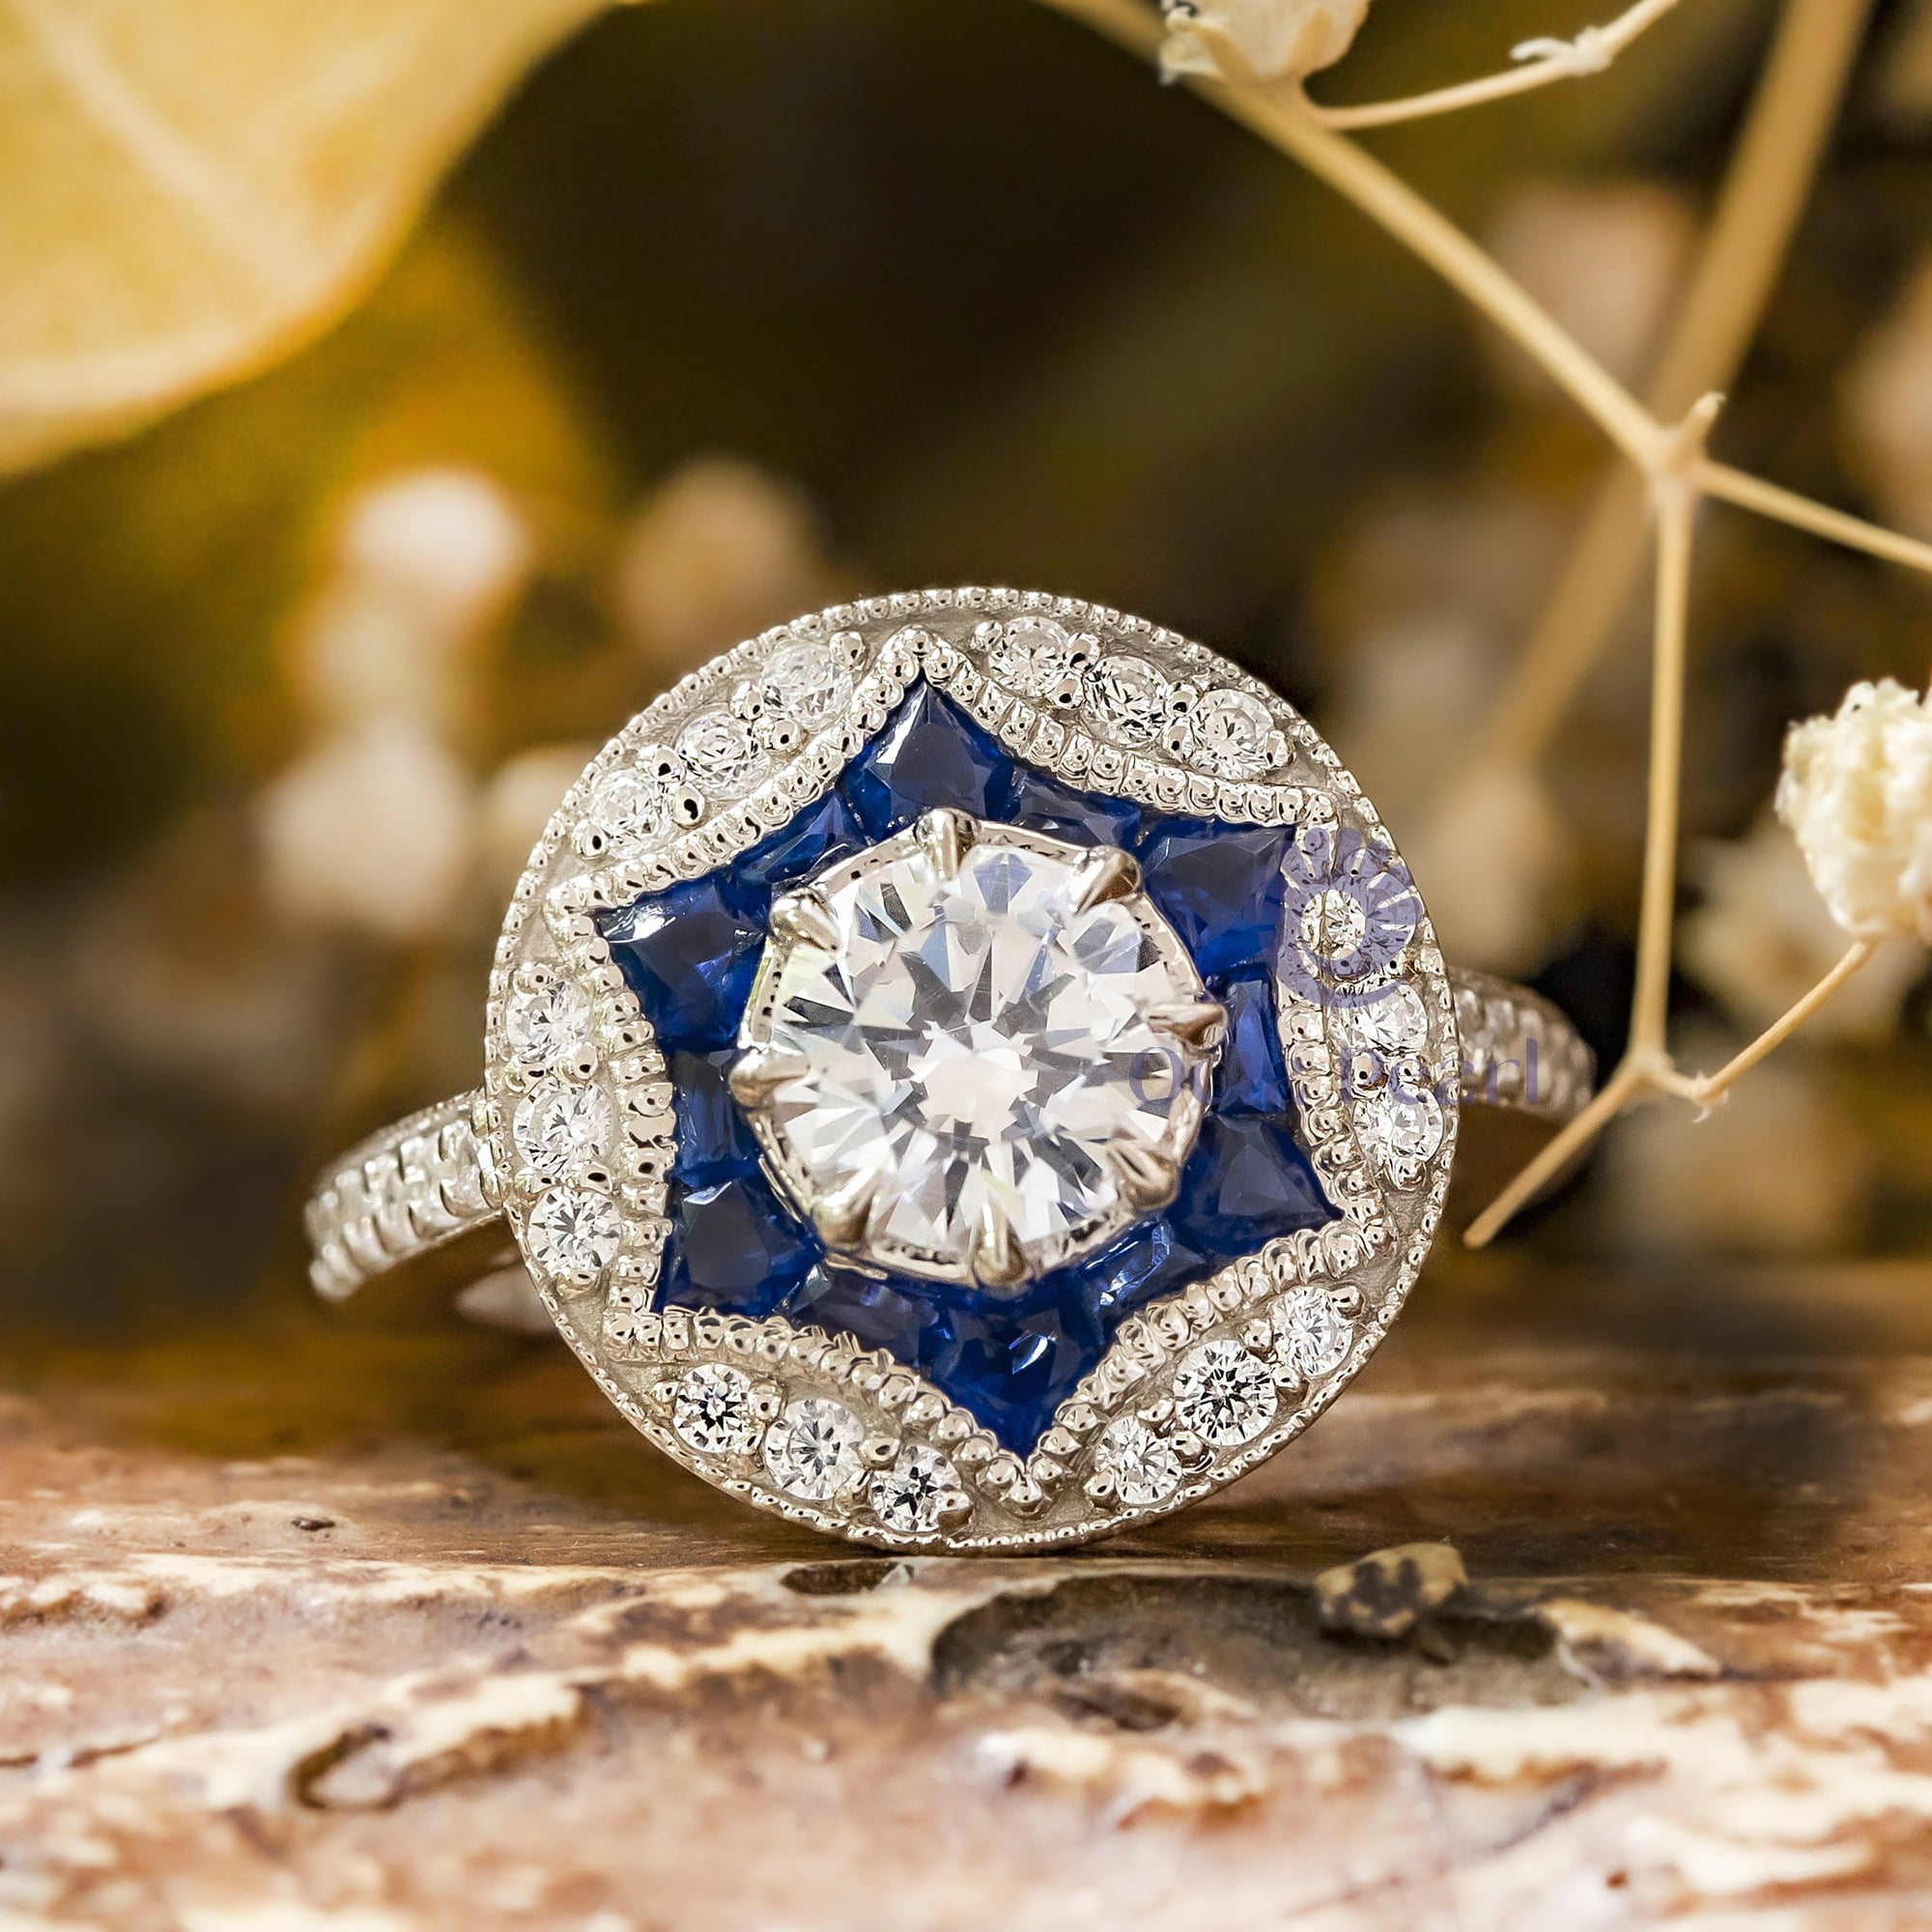 6-50-mm-round-or-baguette-cut-blue-sapphire-cz-stone-starburst-halo-vintage-art-deco-engagement-ring/